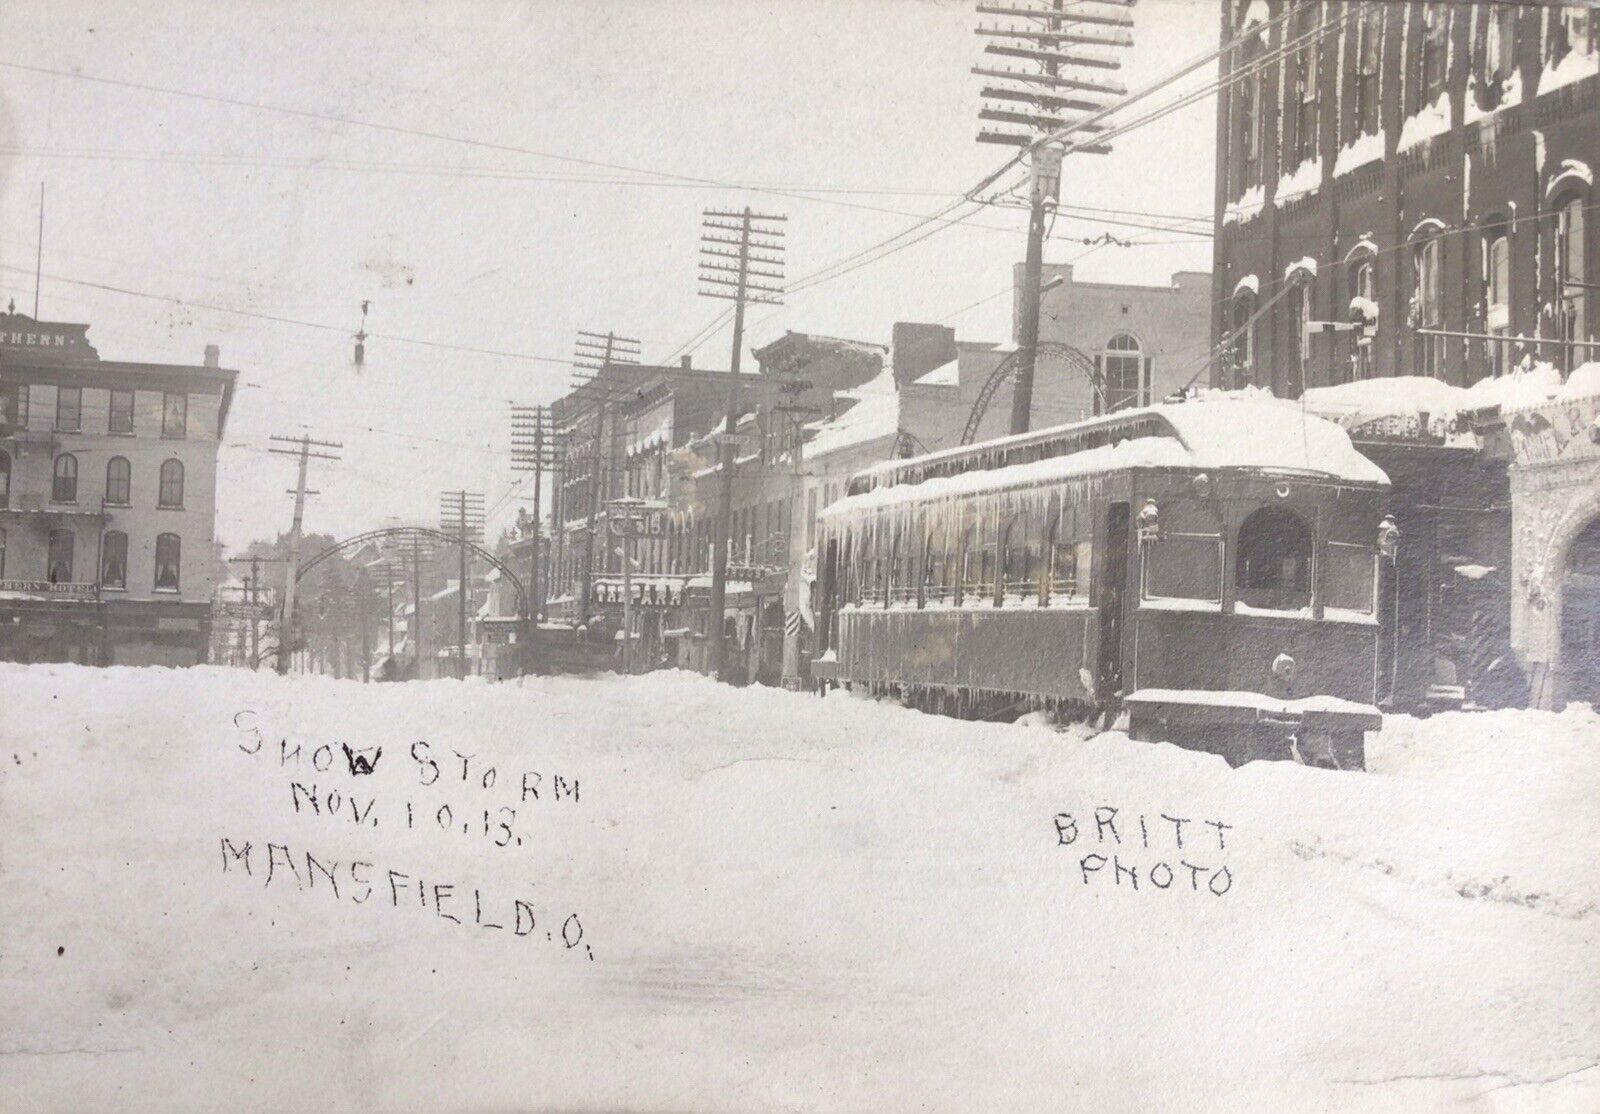 1913 Frozen Downtown Mansfield Ohio Snowstorm BRITT RPPC PHOTO On The Square